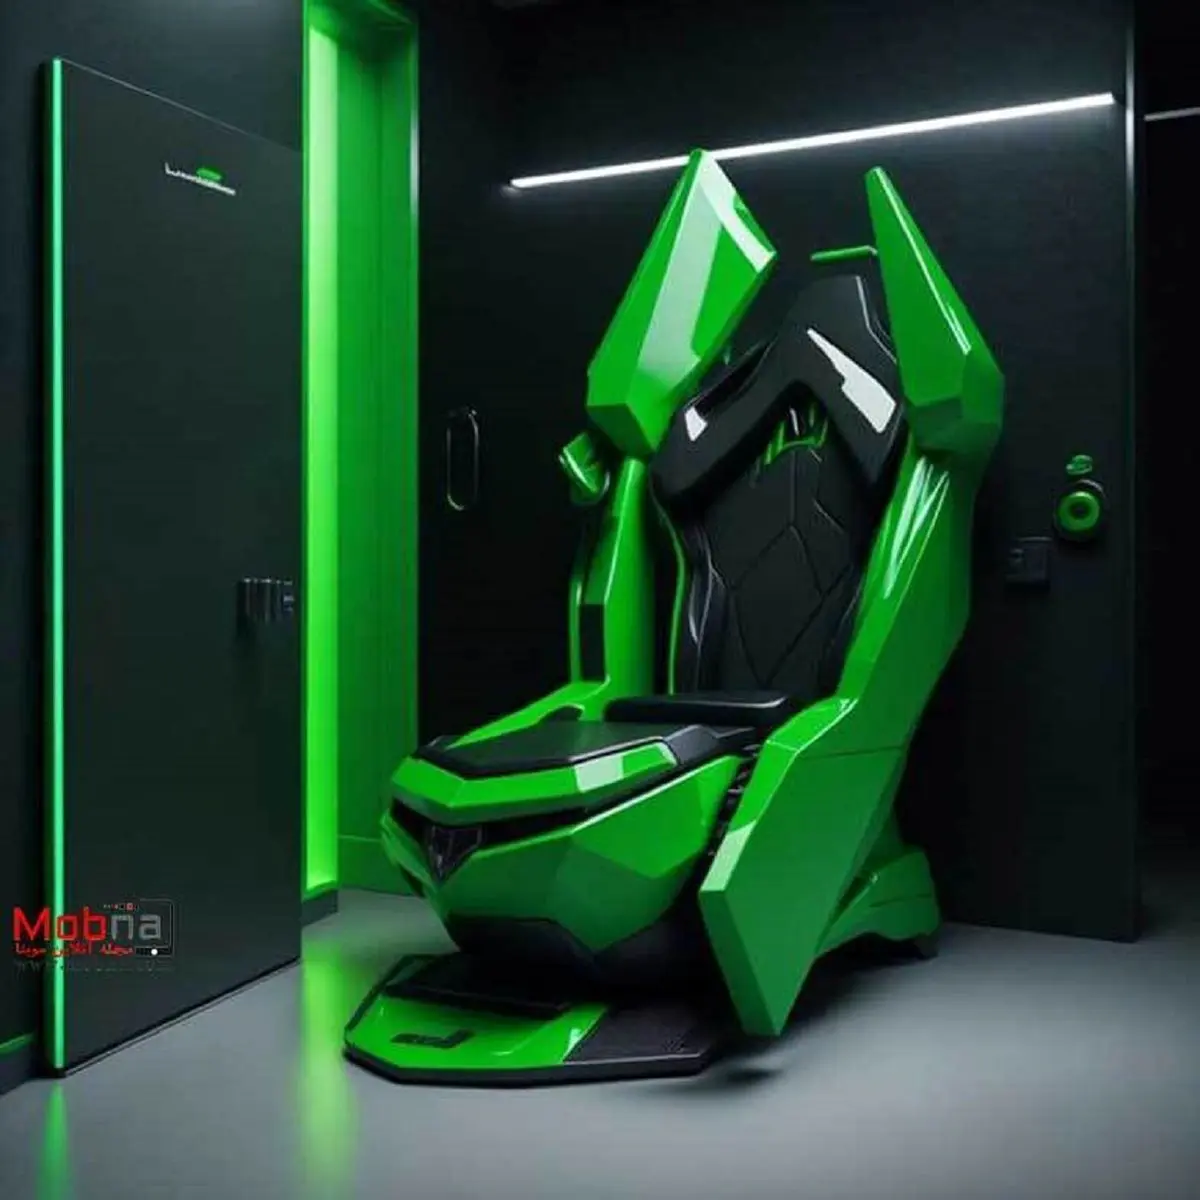 طراحی توالت به سبک خودروی لامبورگینی توسط هوش مصنوعی!